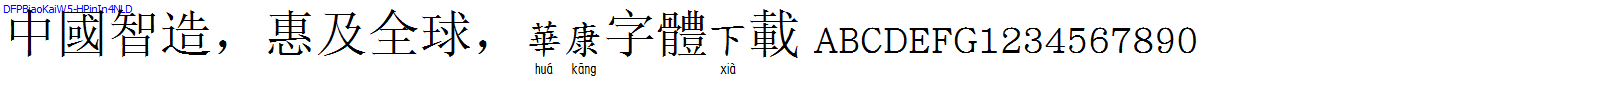 華康字體DFPBiaoKaiW5-HPinIn4NLD.TTF